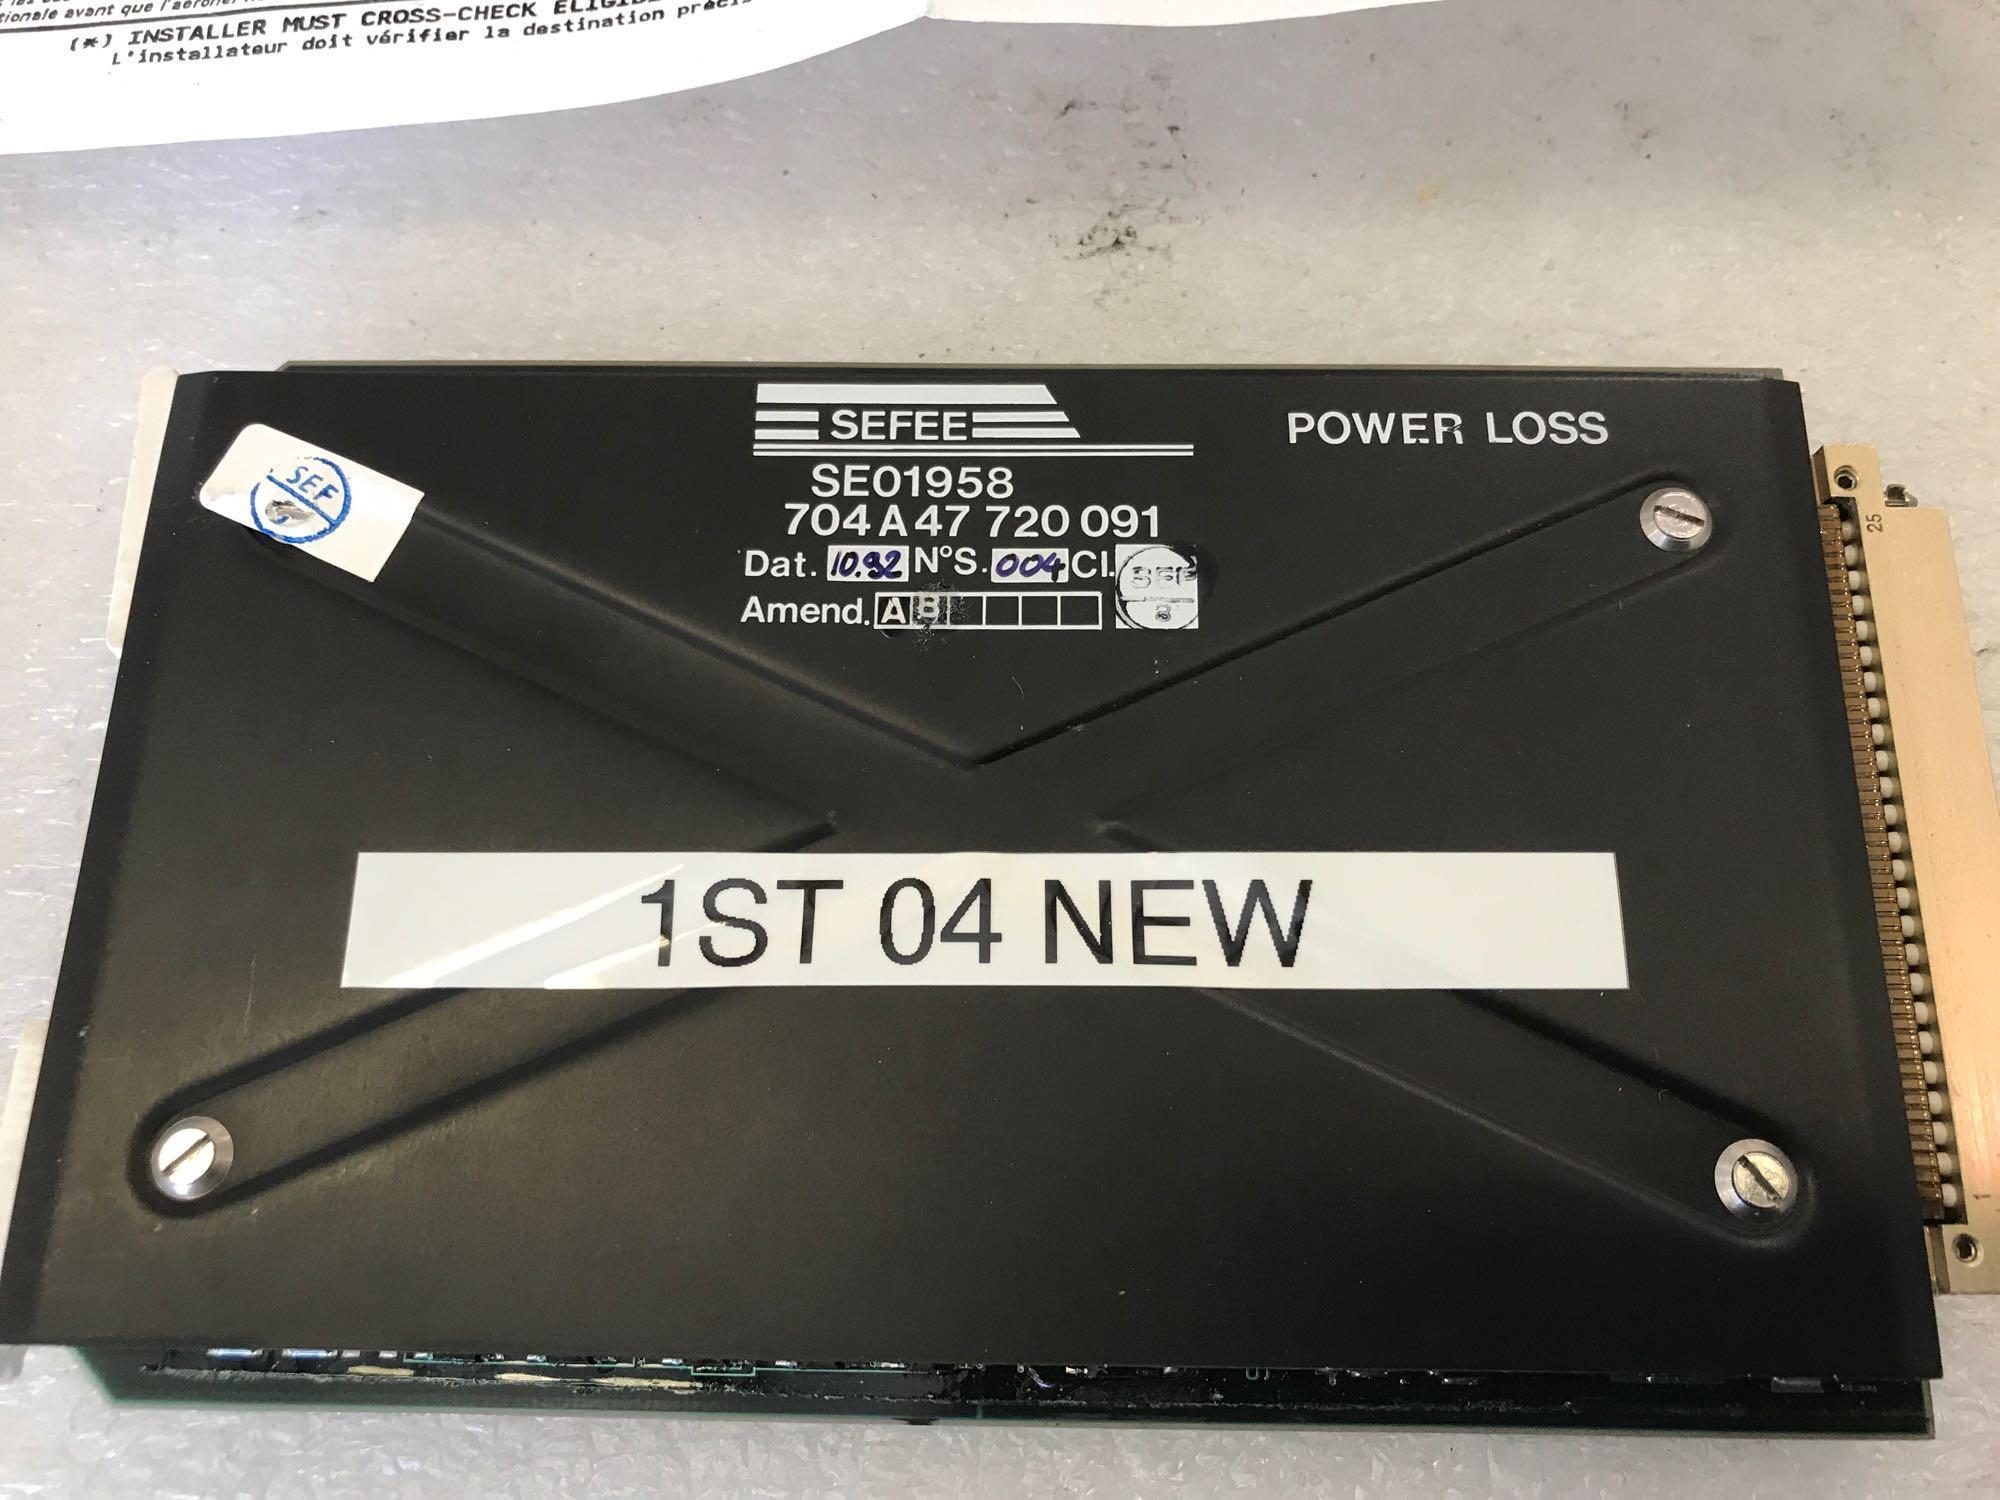 POWER LOSS PCB'S SE01958 (INSPECTED)